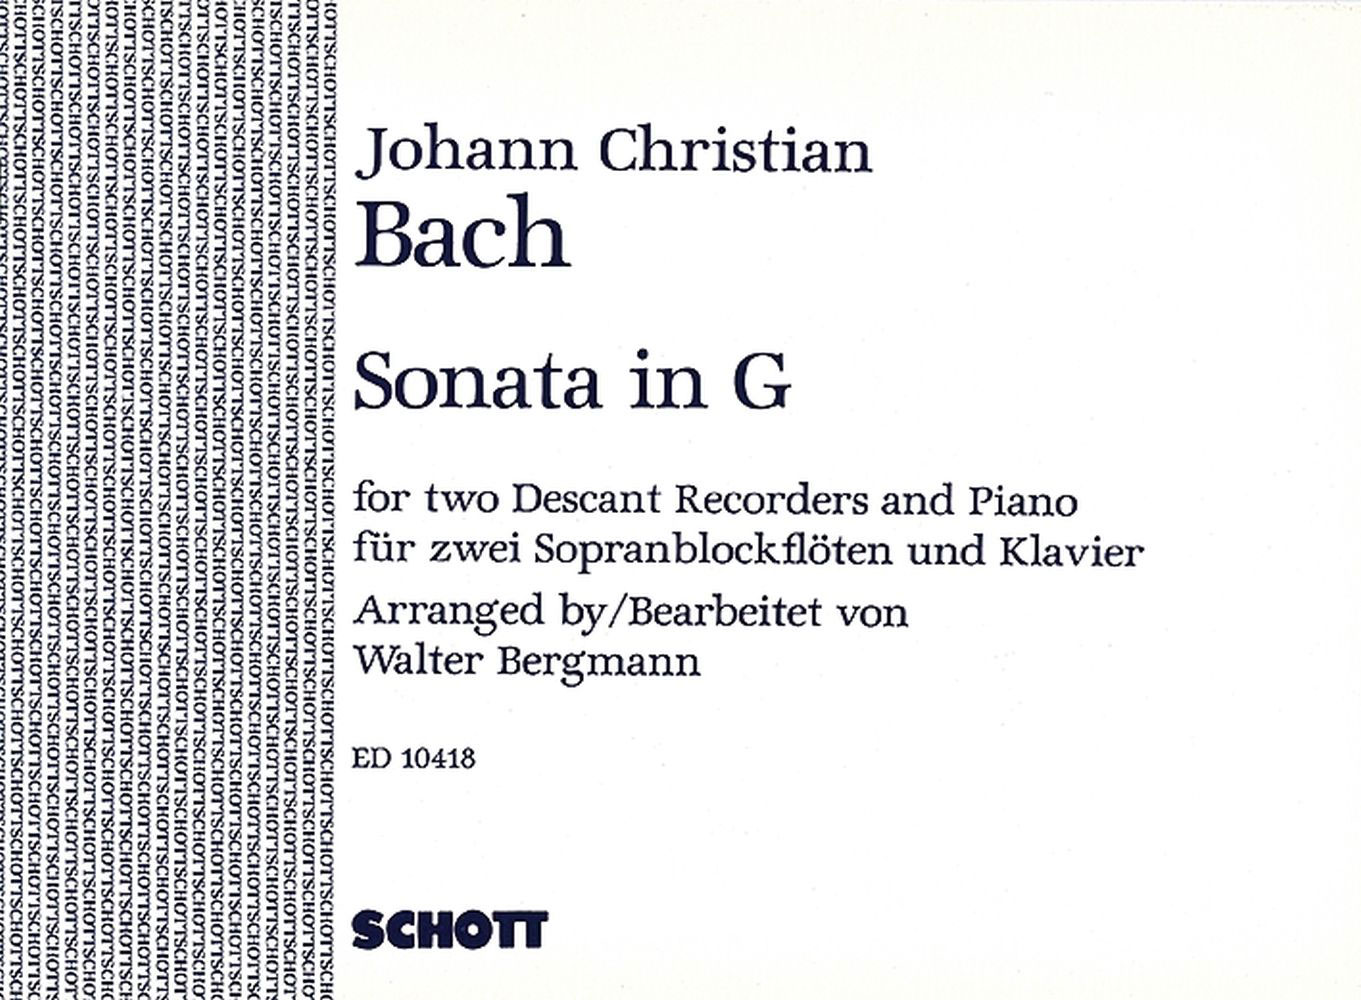 SCHOTT BACH J.C. - SONATA G MAJOR NACH OP.16/2 - 2 DESCANT RECORDERS AND PIANO